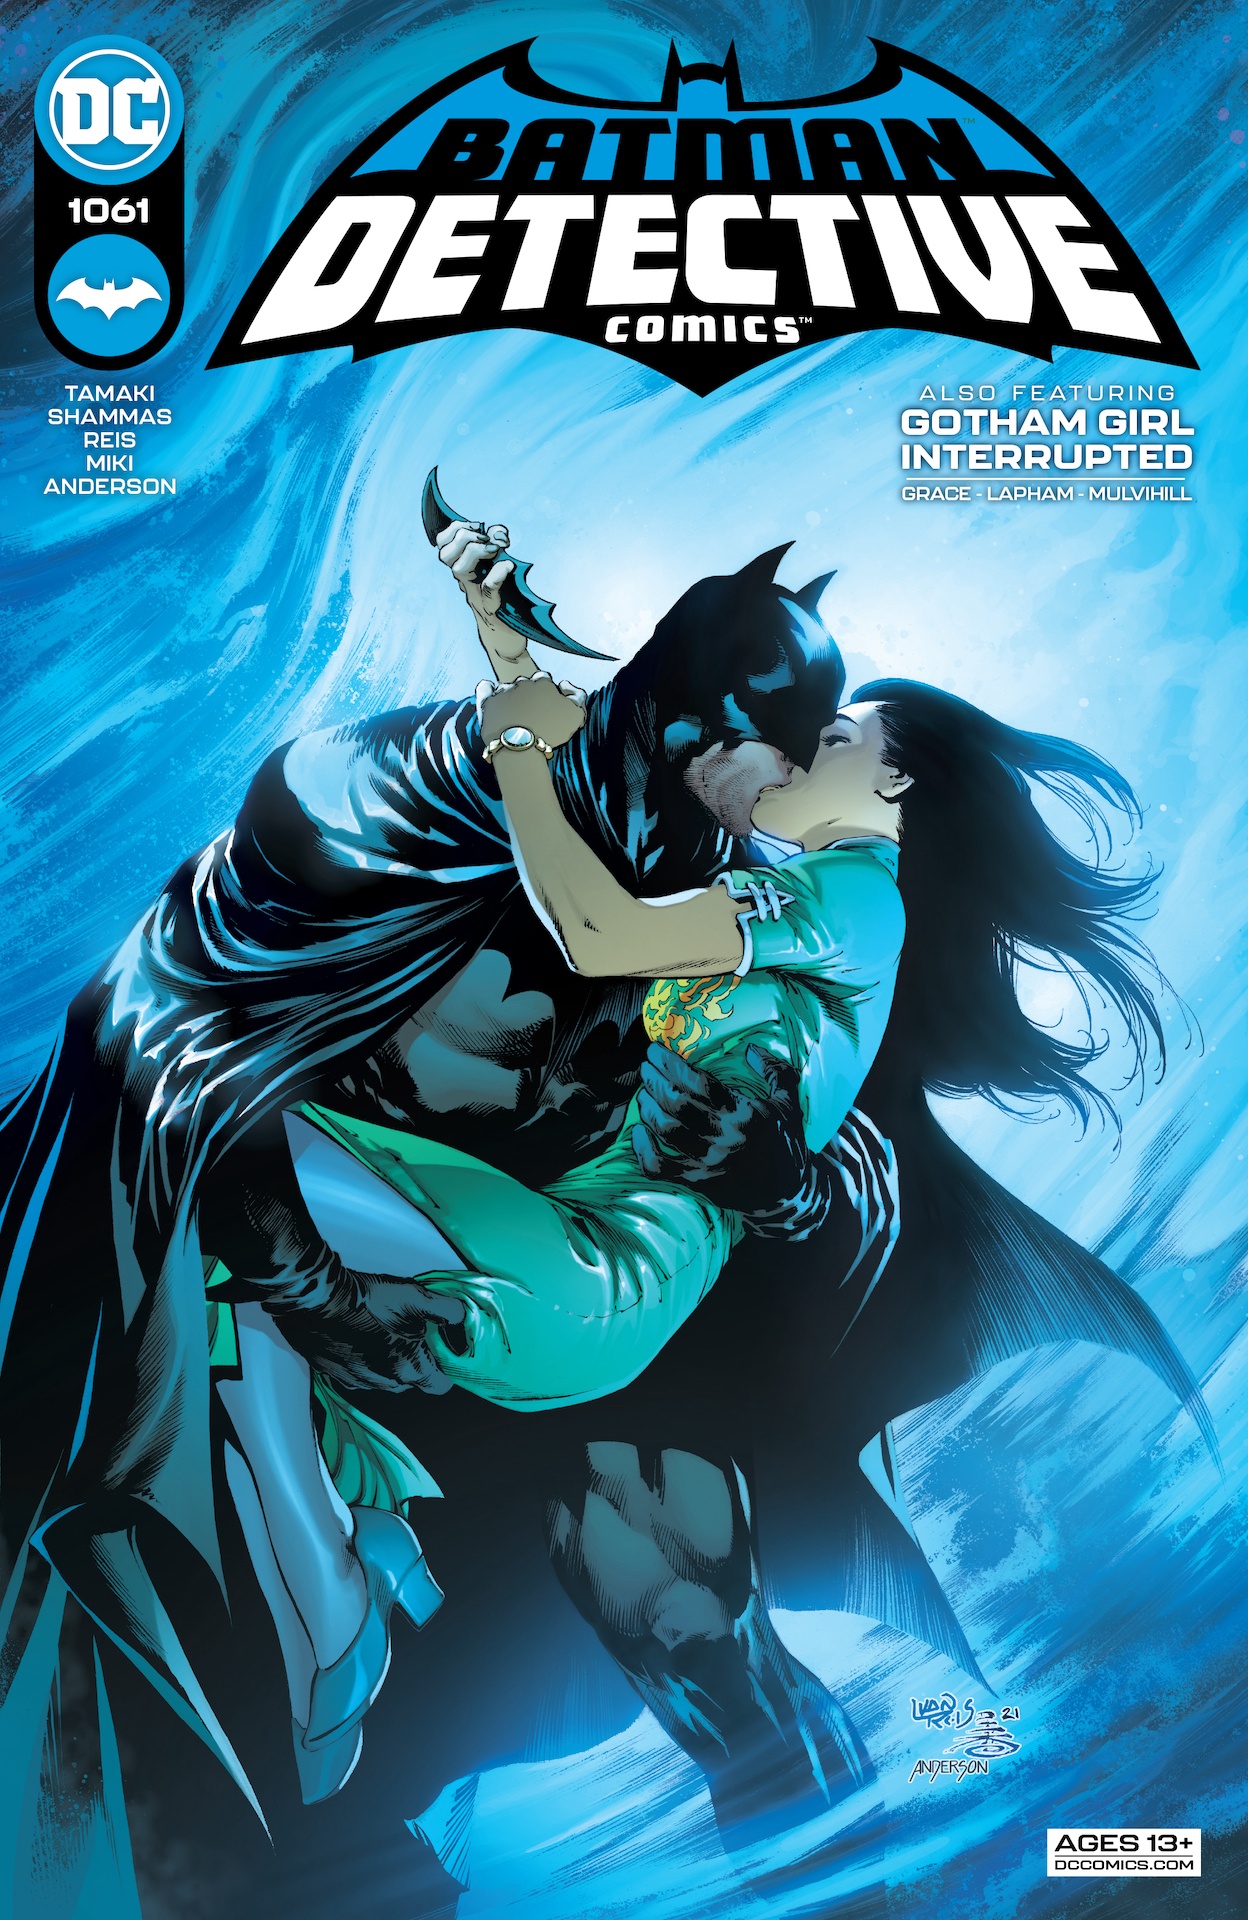 DC Preview: Detective Comics #1061